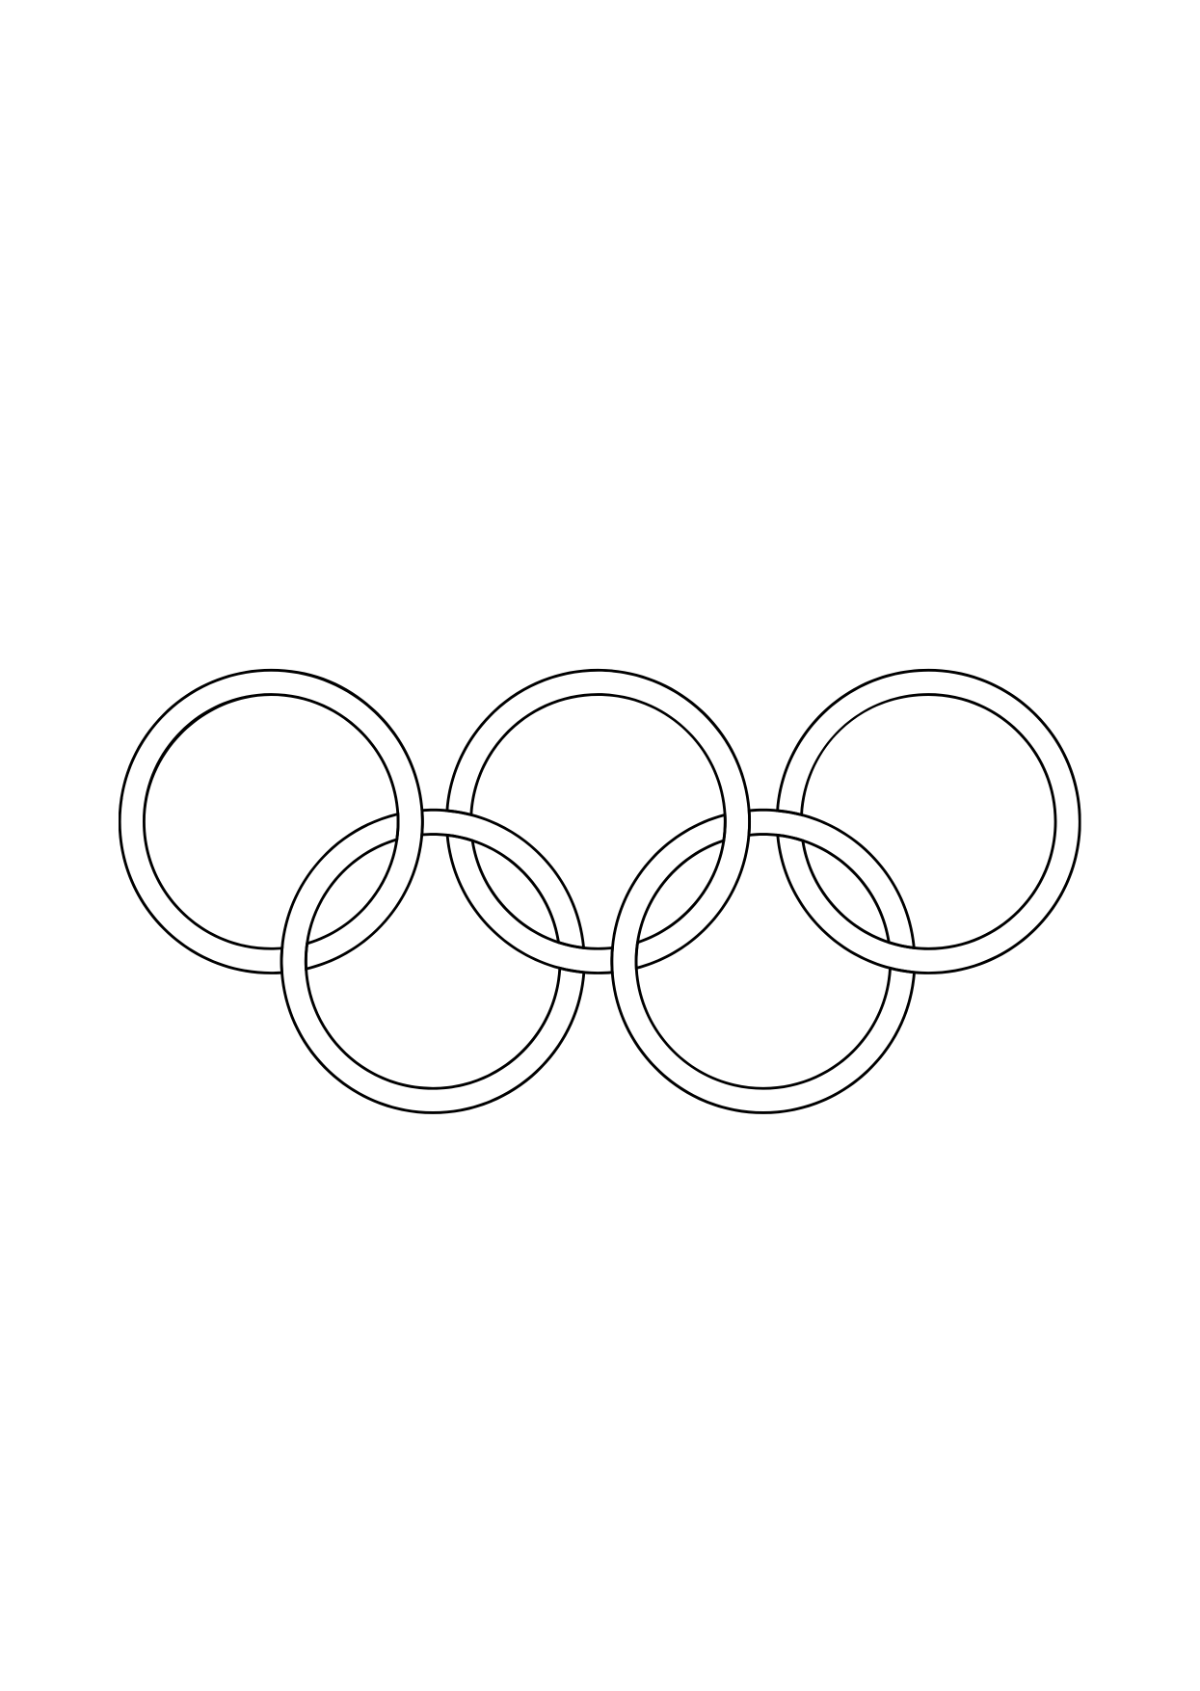 Olympics Rings Drawing